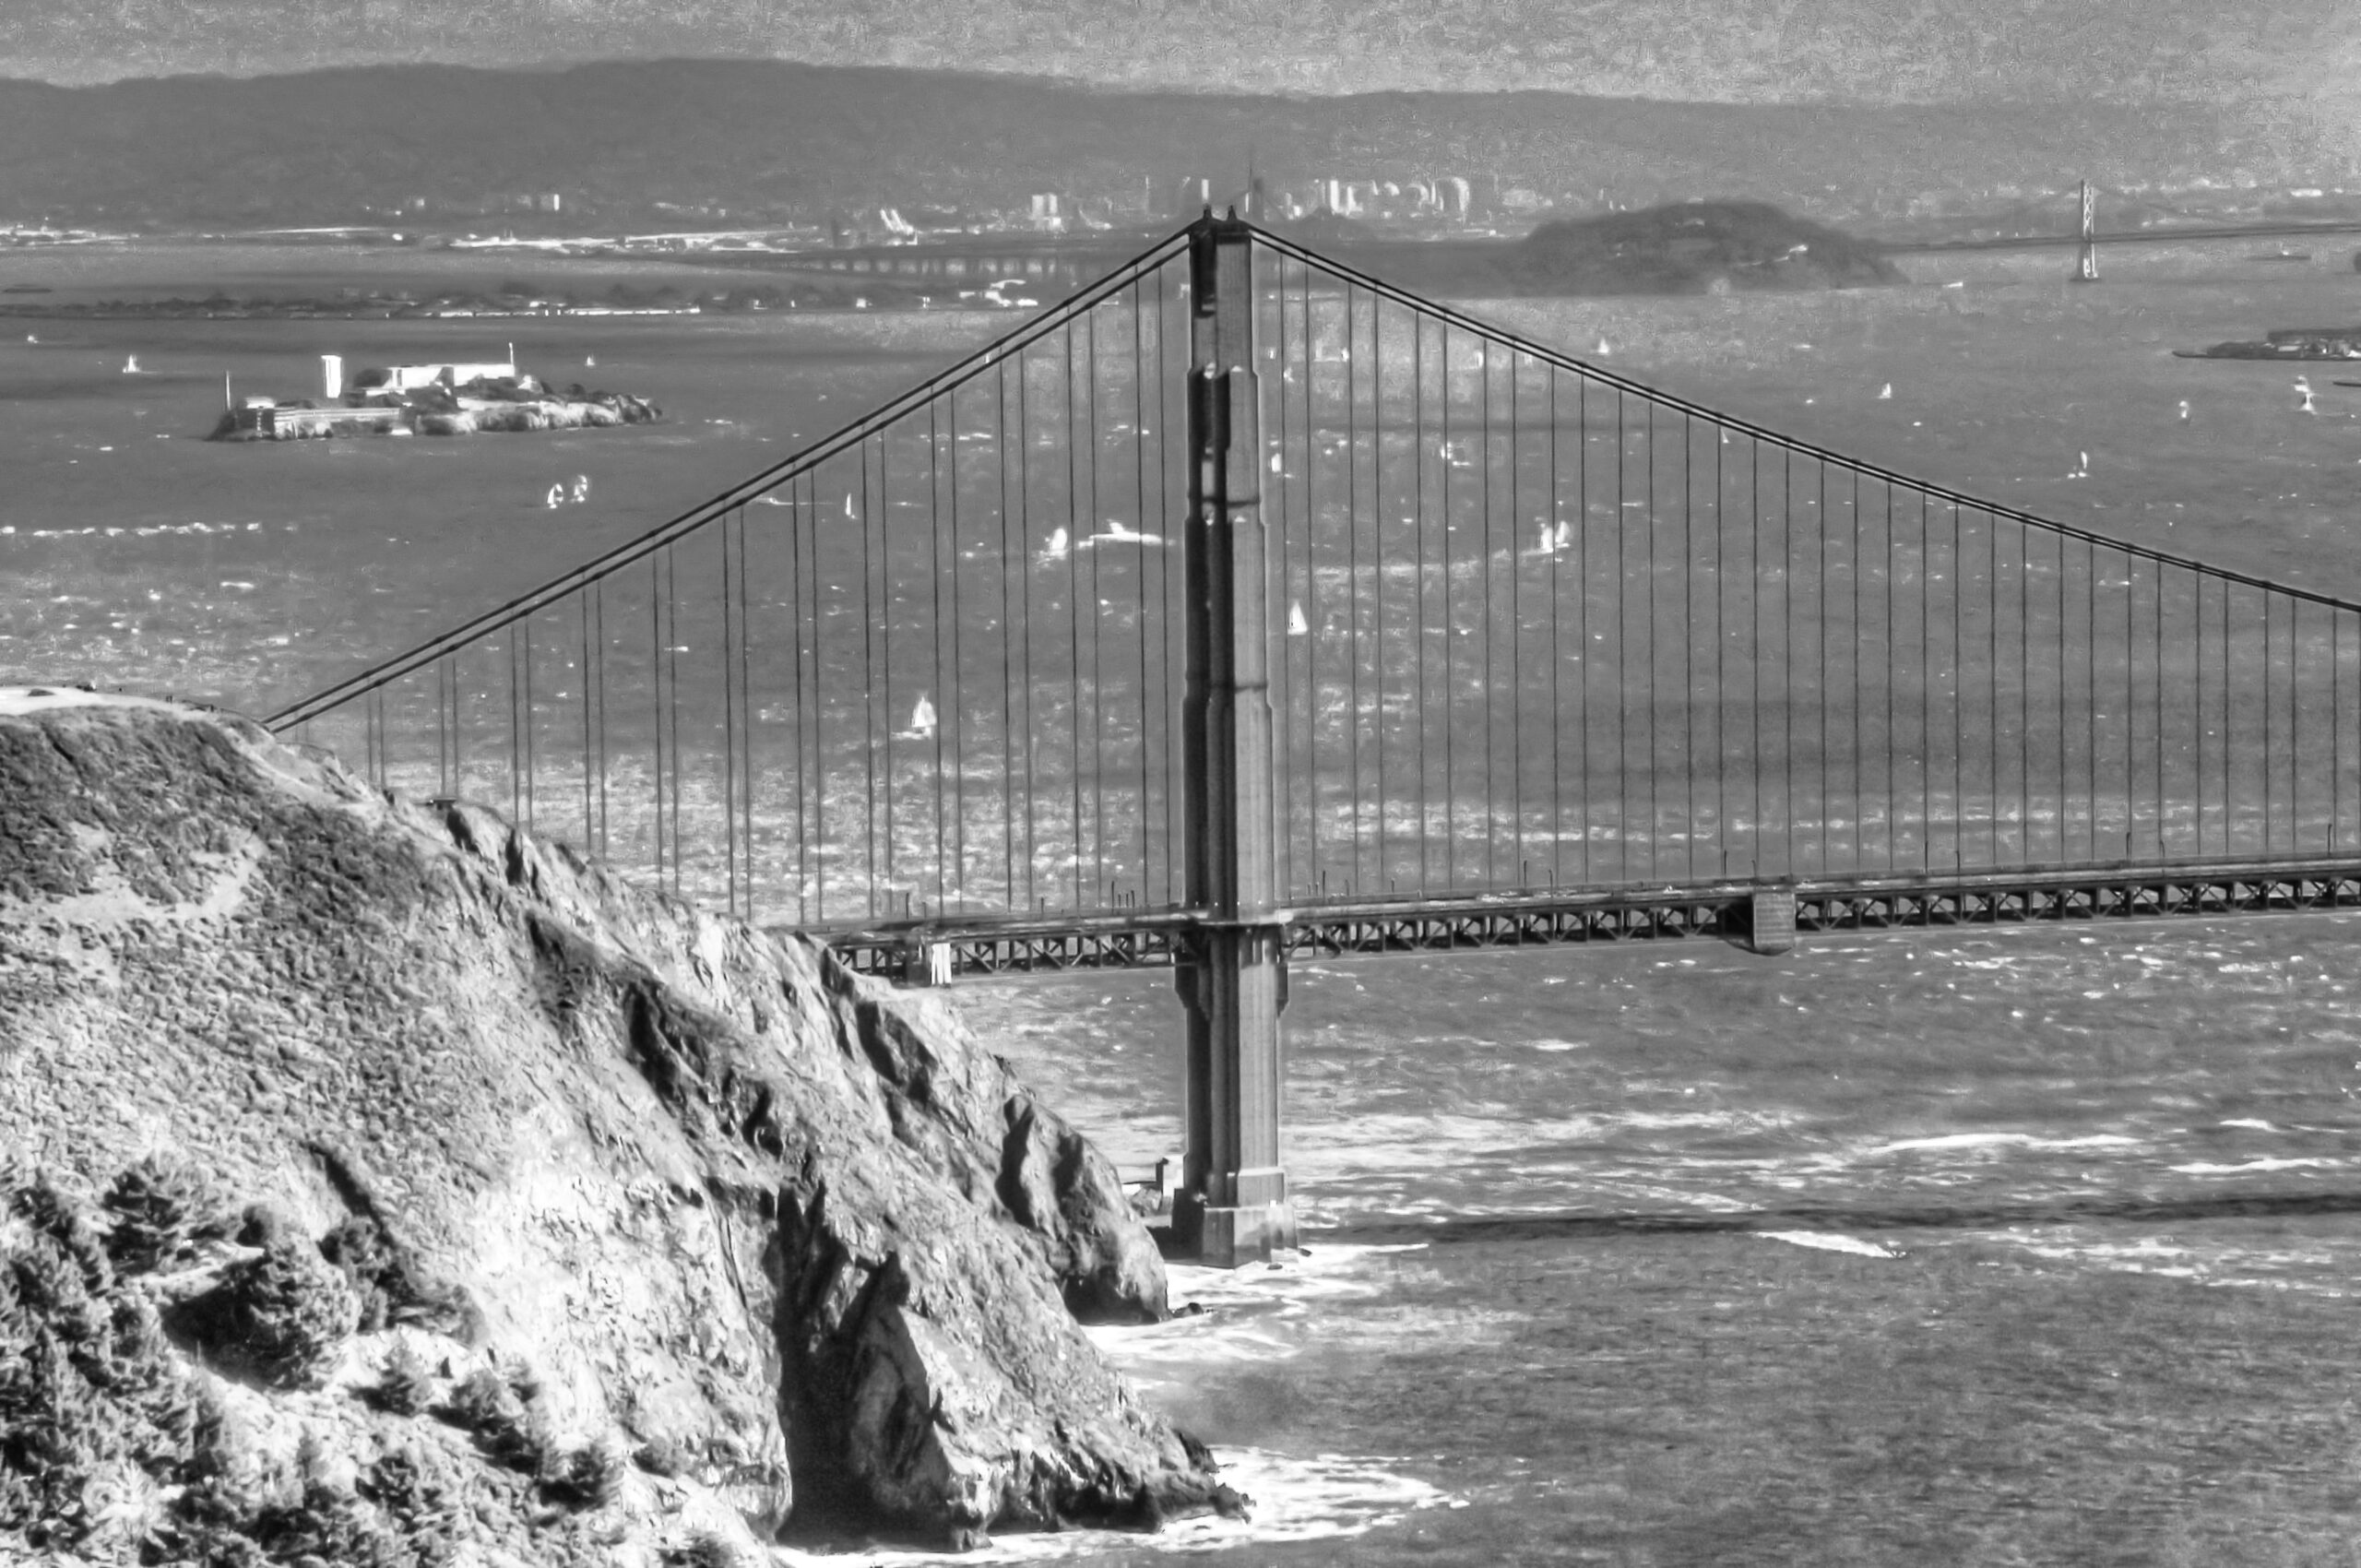 San Francisco Bay, Alcatraz, Golden Gate Bridge